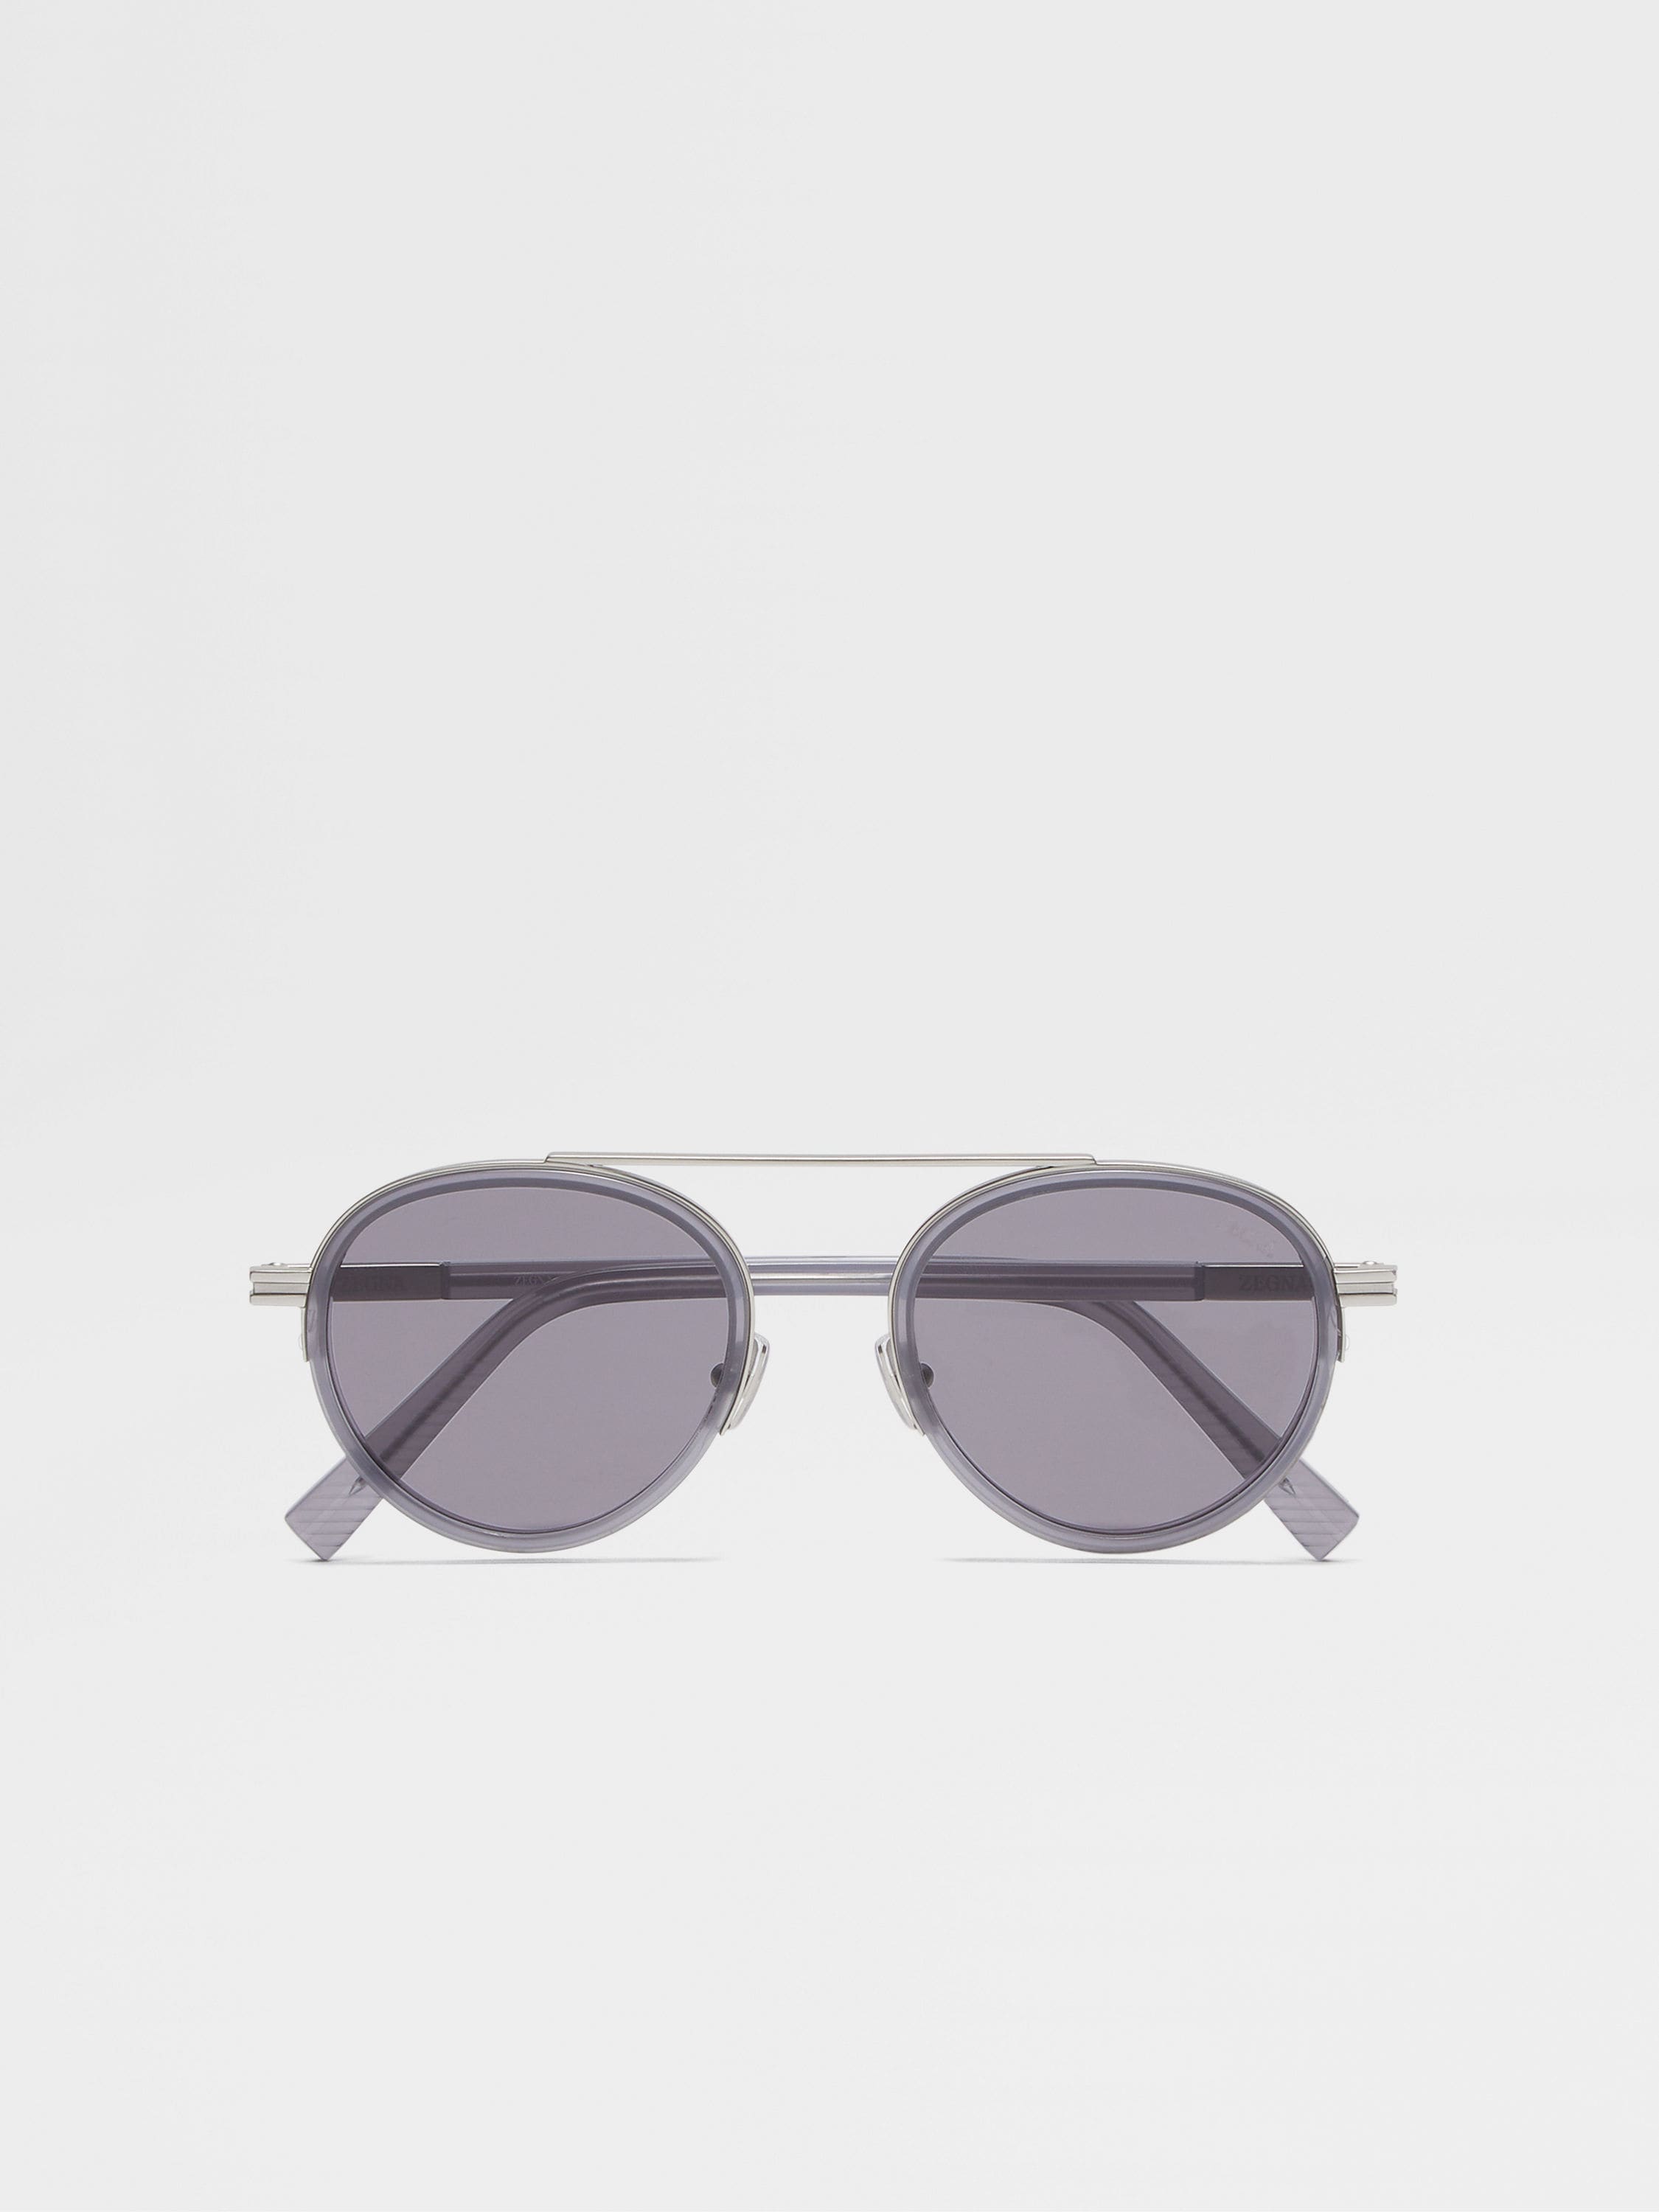 Opal Grey Orizzonte II Acetate and Metal Sunglasses